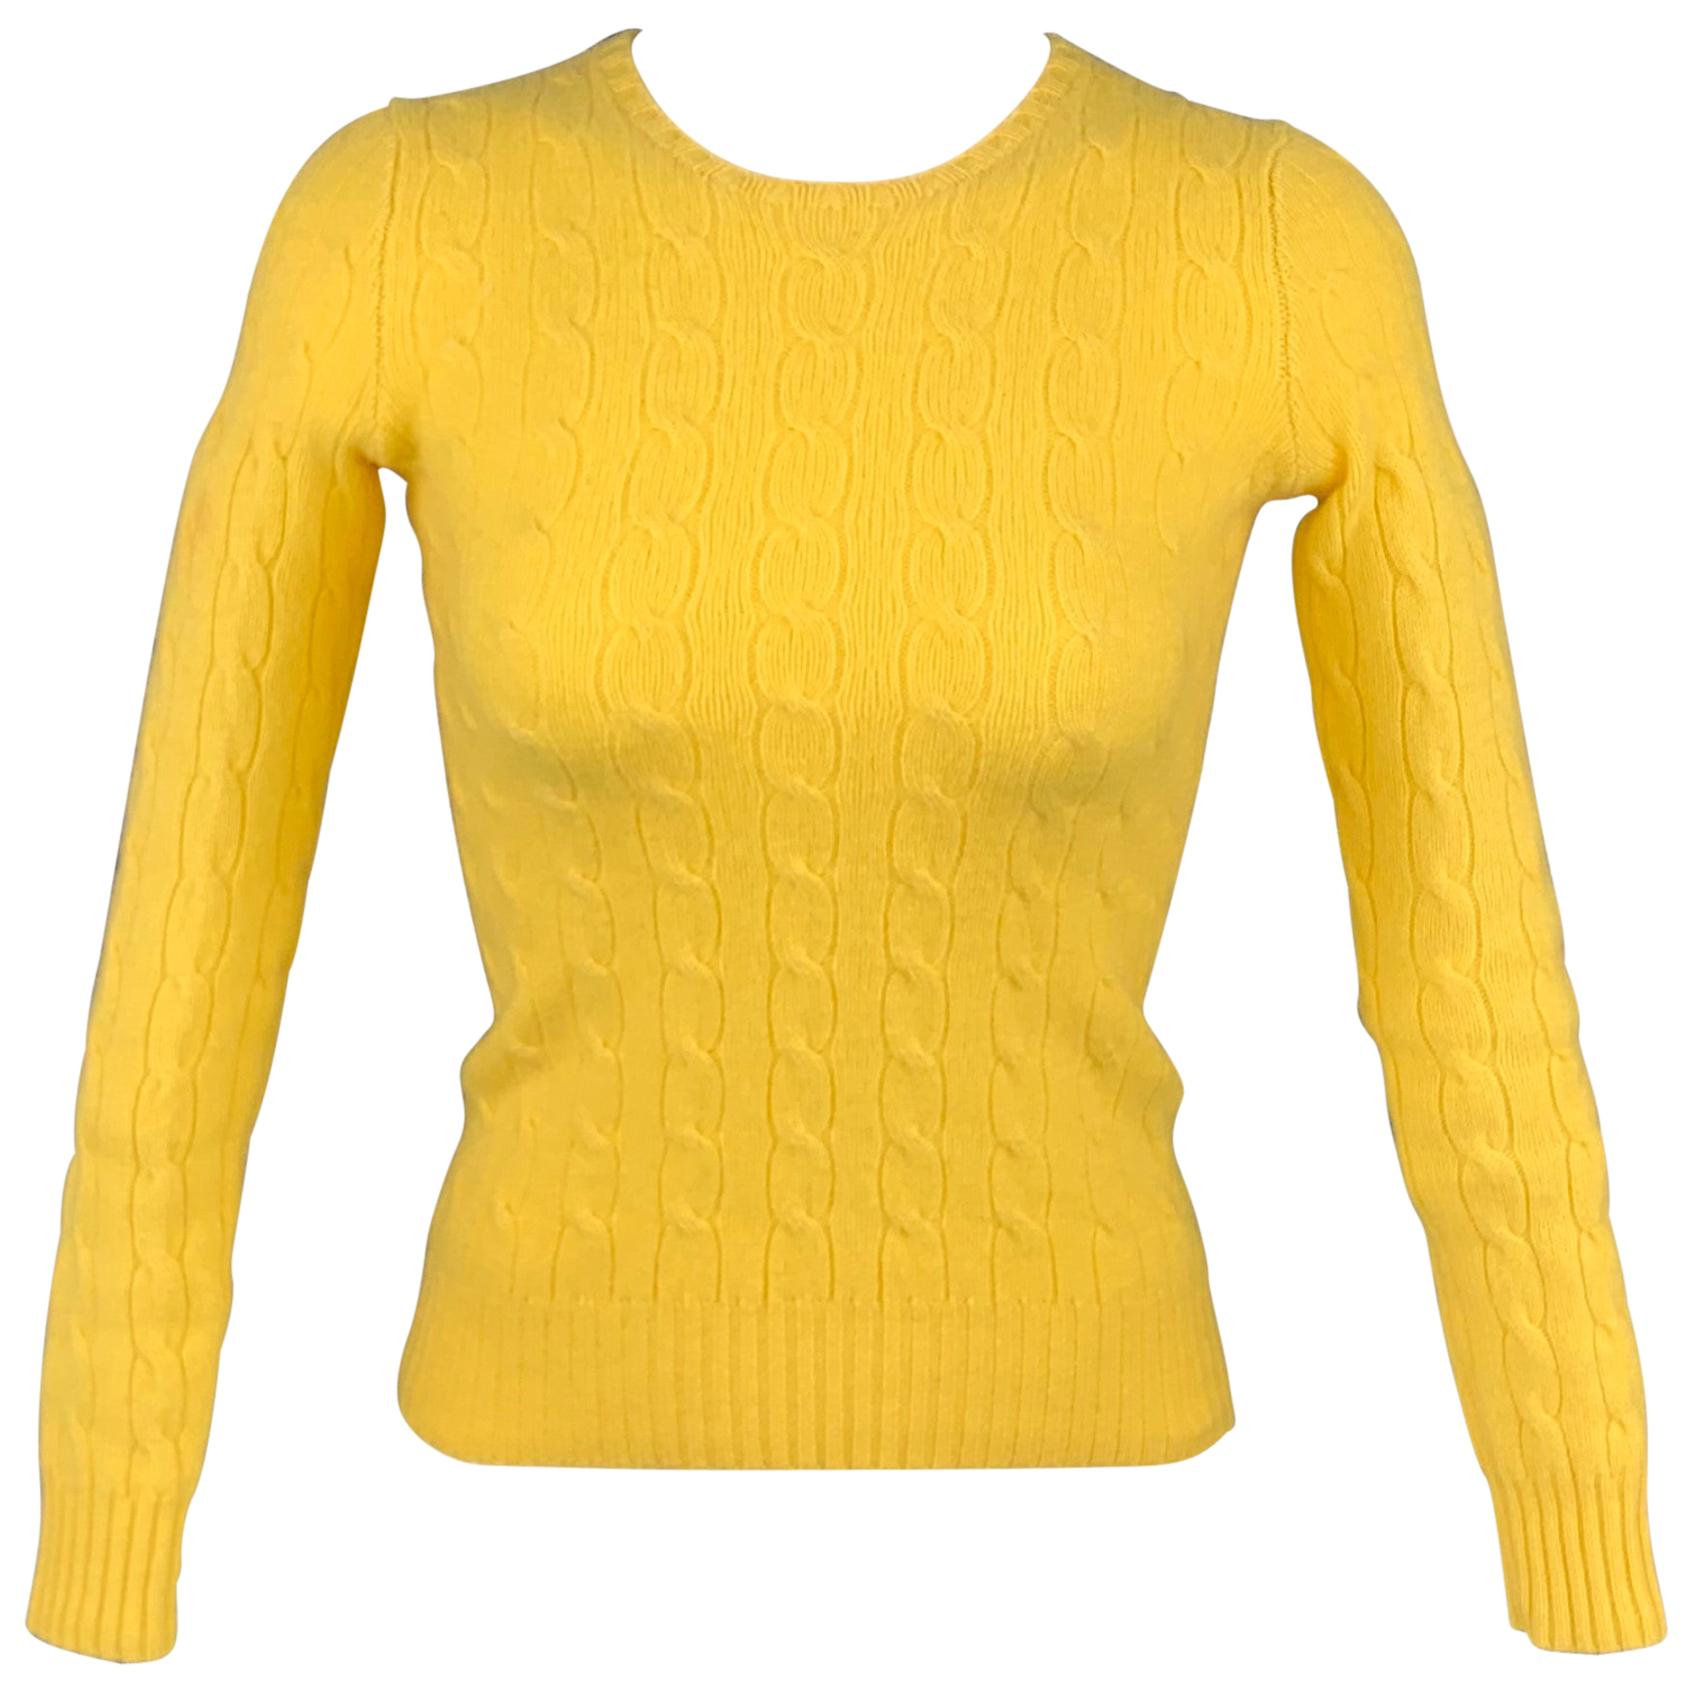 RALPH LAUREN Black Label Size S Yellow Cashmere Cable Knit Sweater